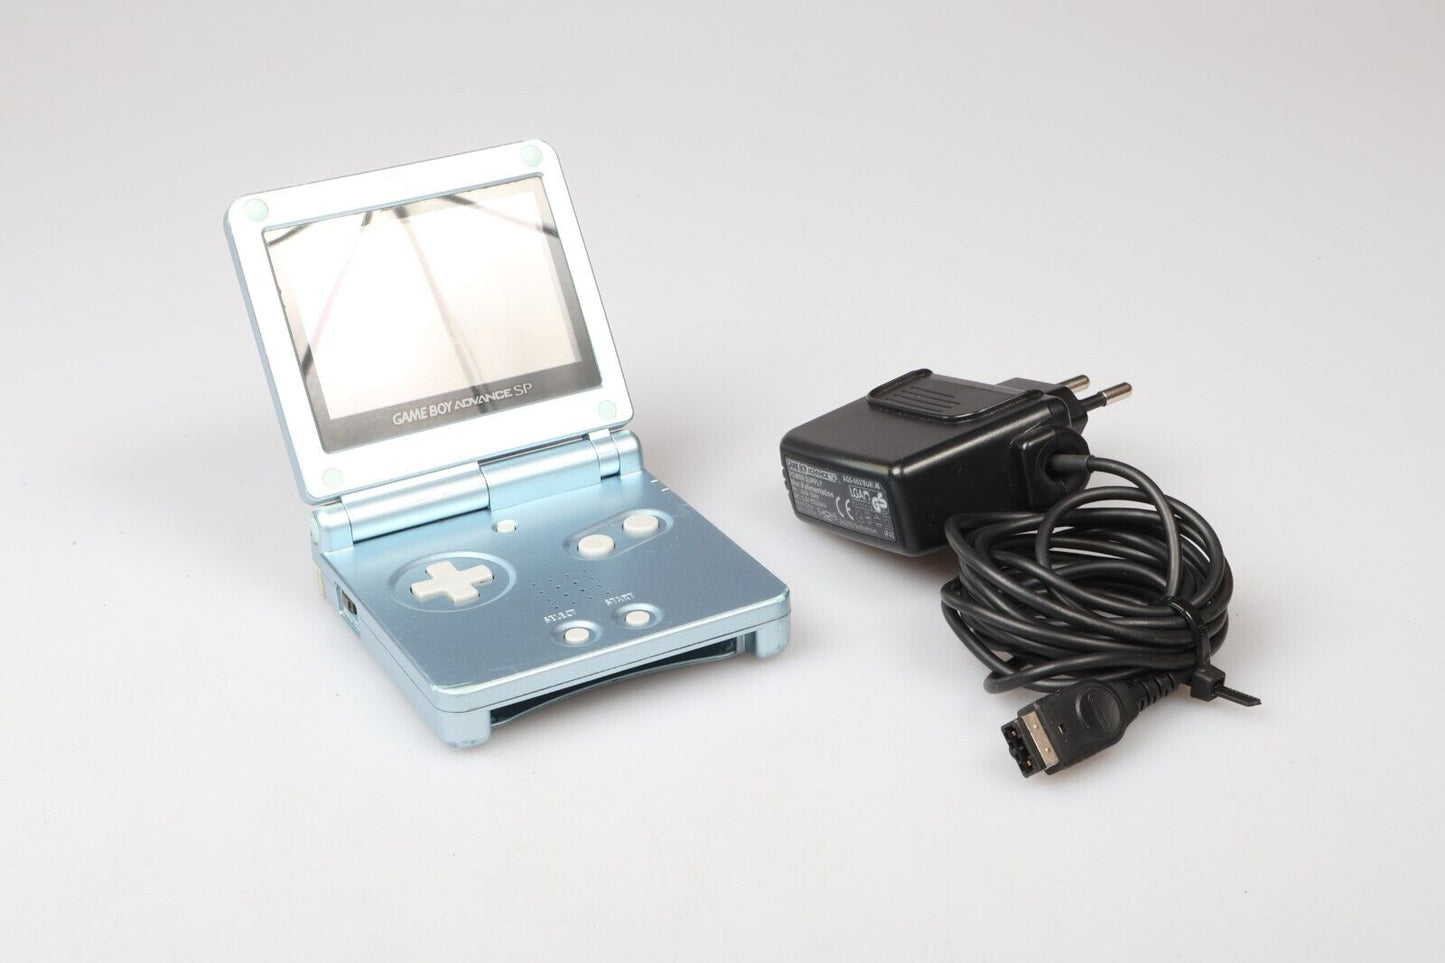 Gameboy Advance SP | ASG-001 Handheld Parelblauw 